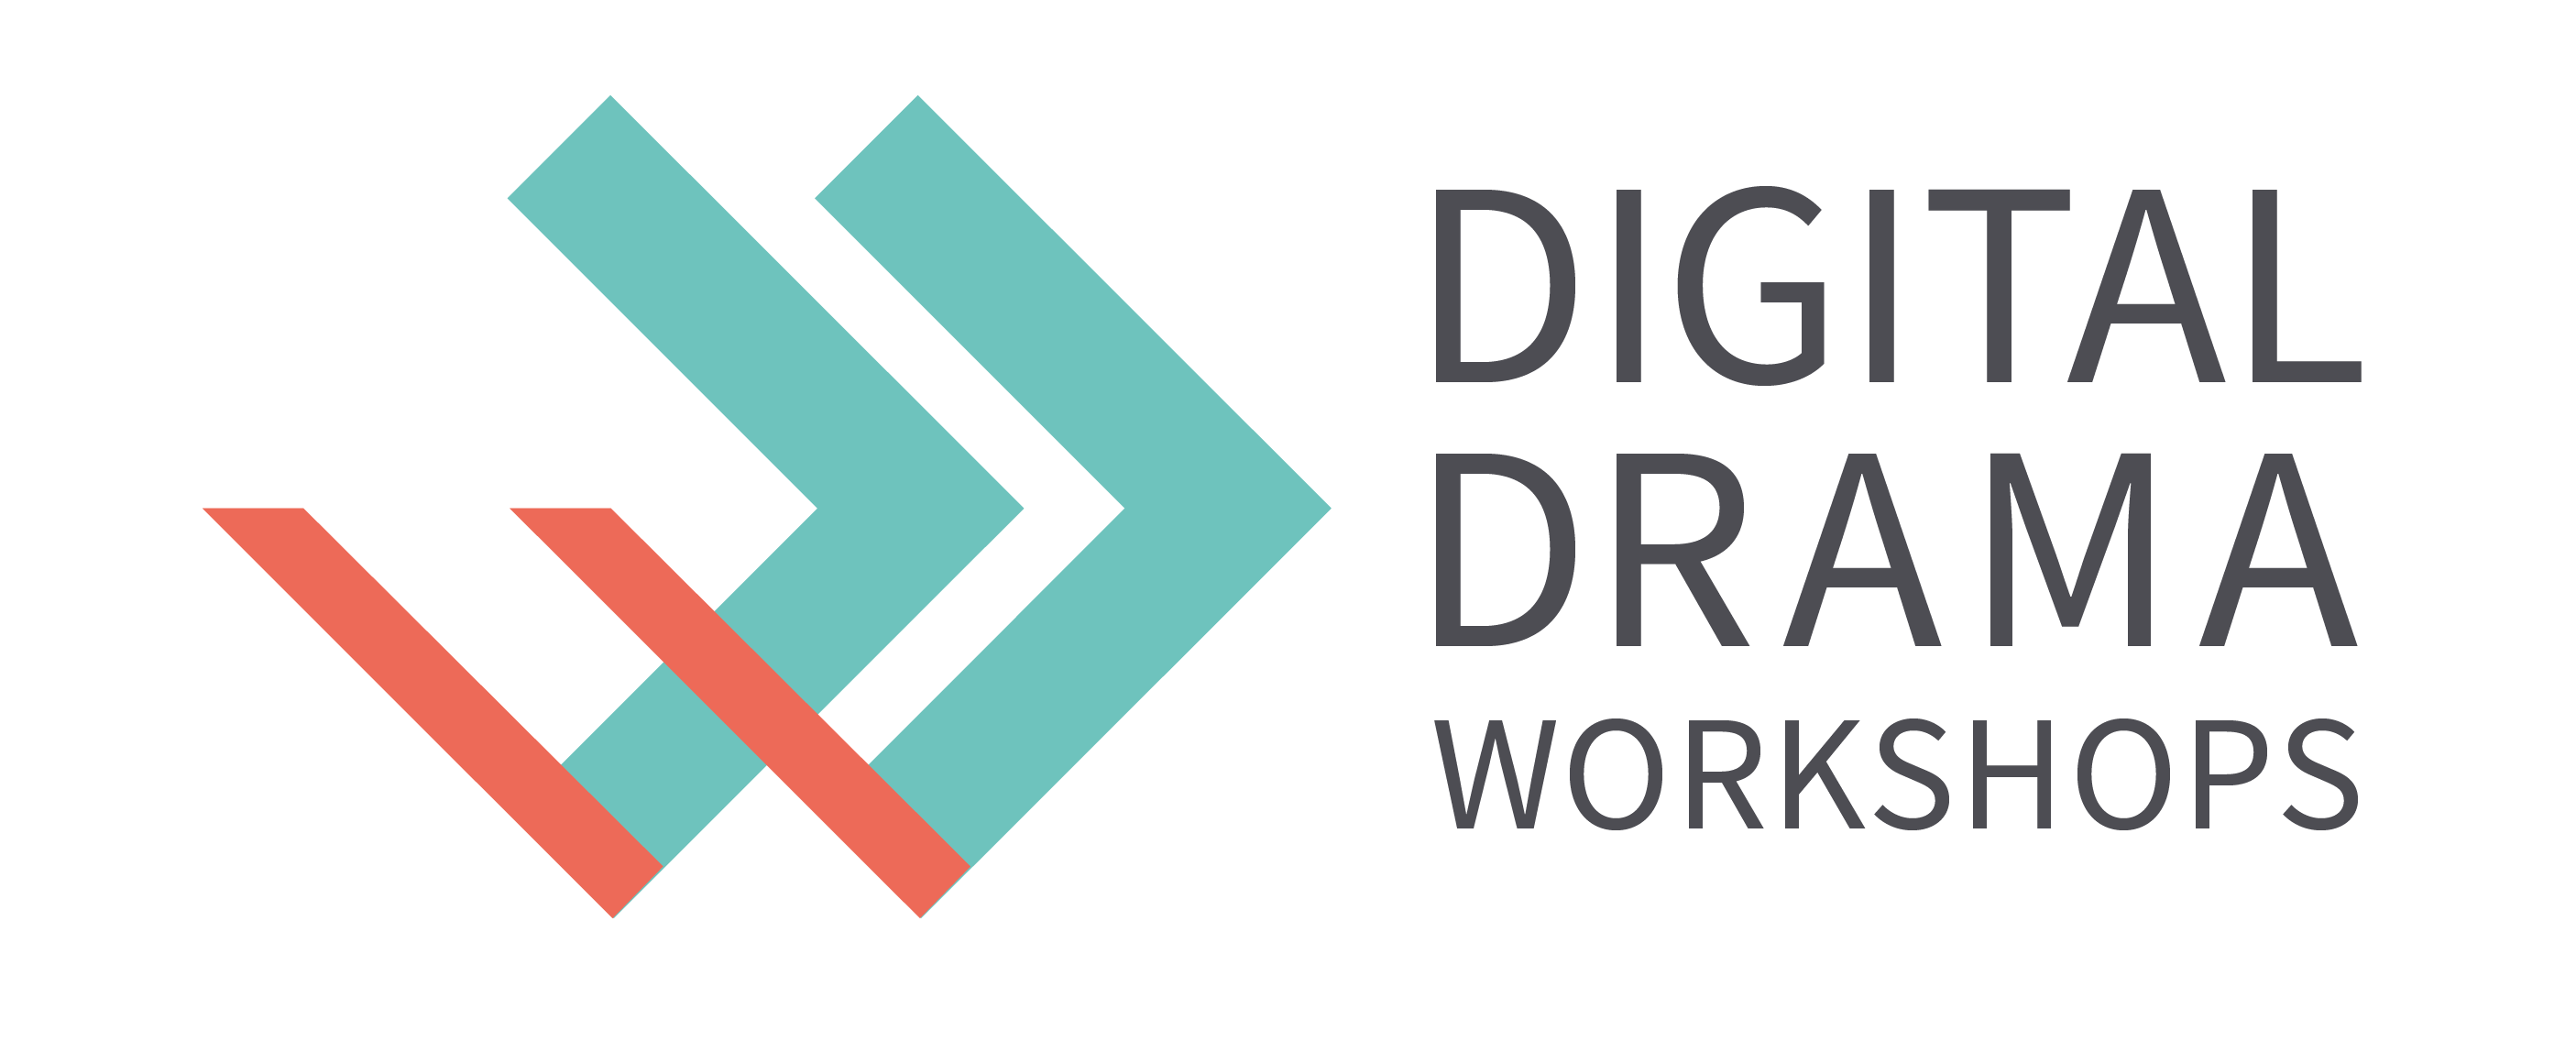 Digital Drama Workshops